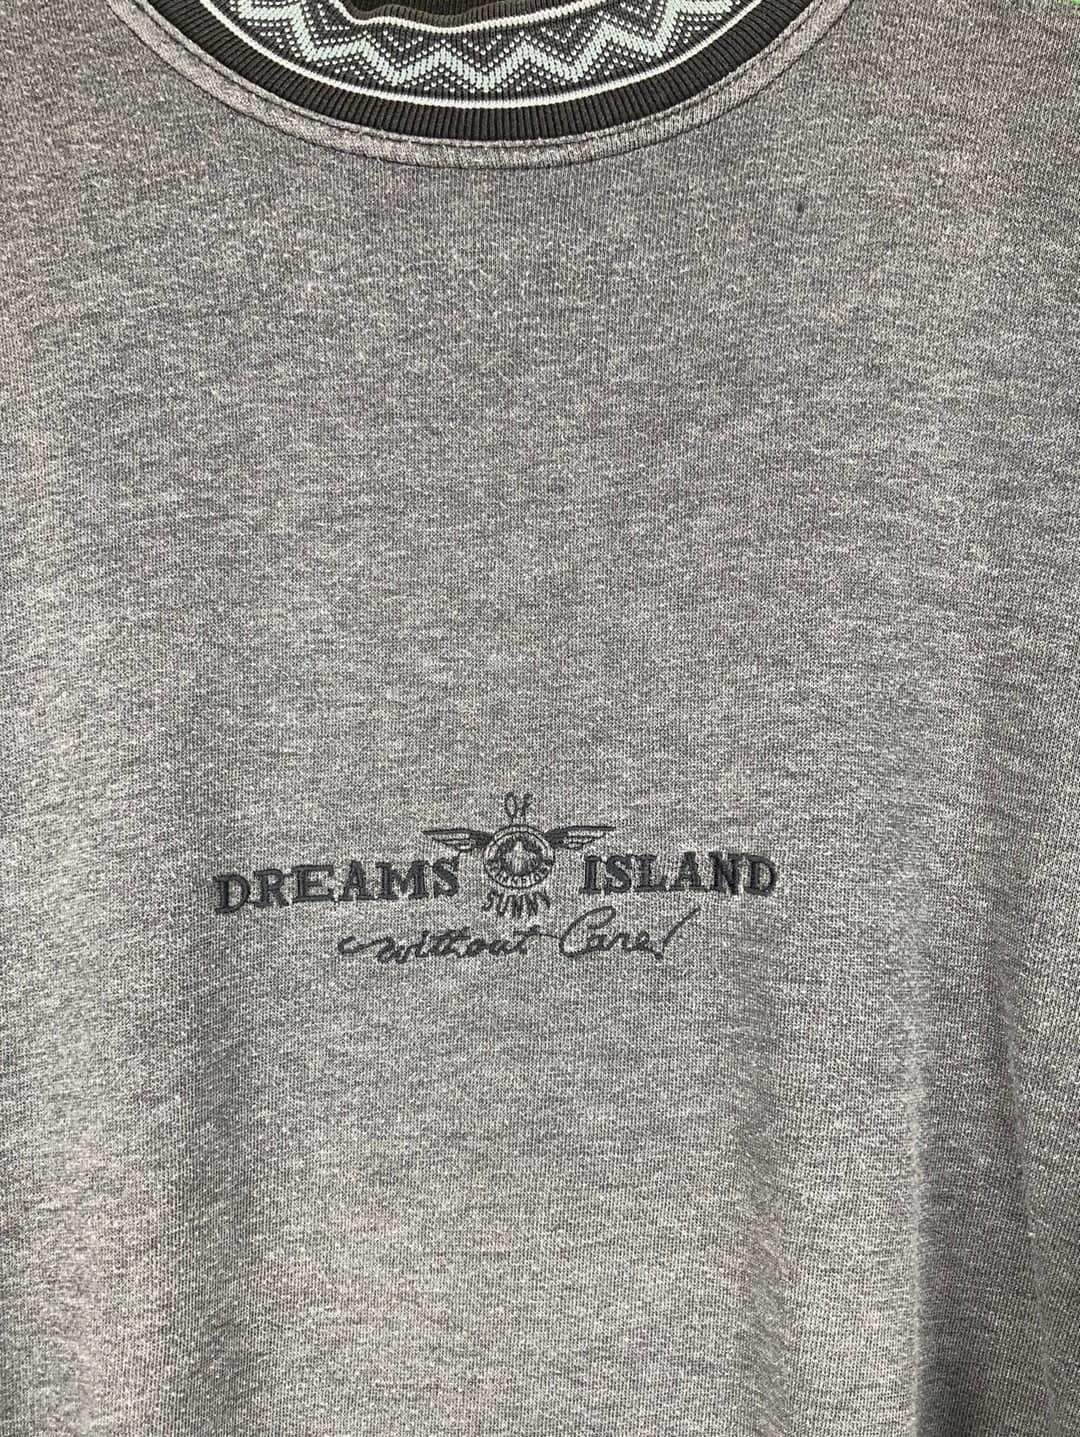 “Dreams Island” Sweater (M)